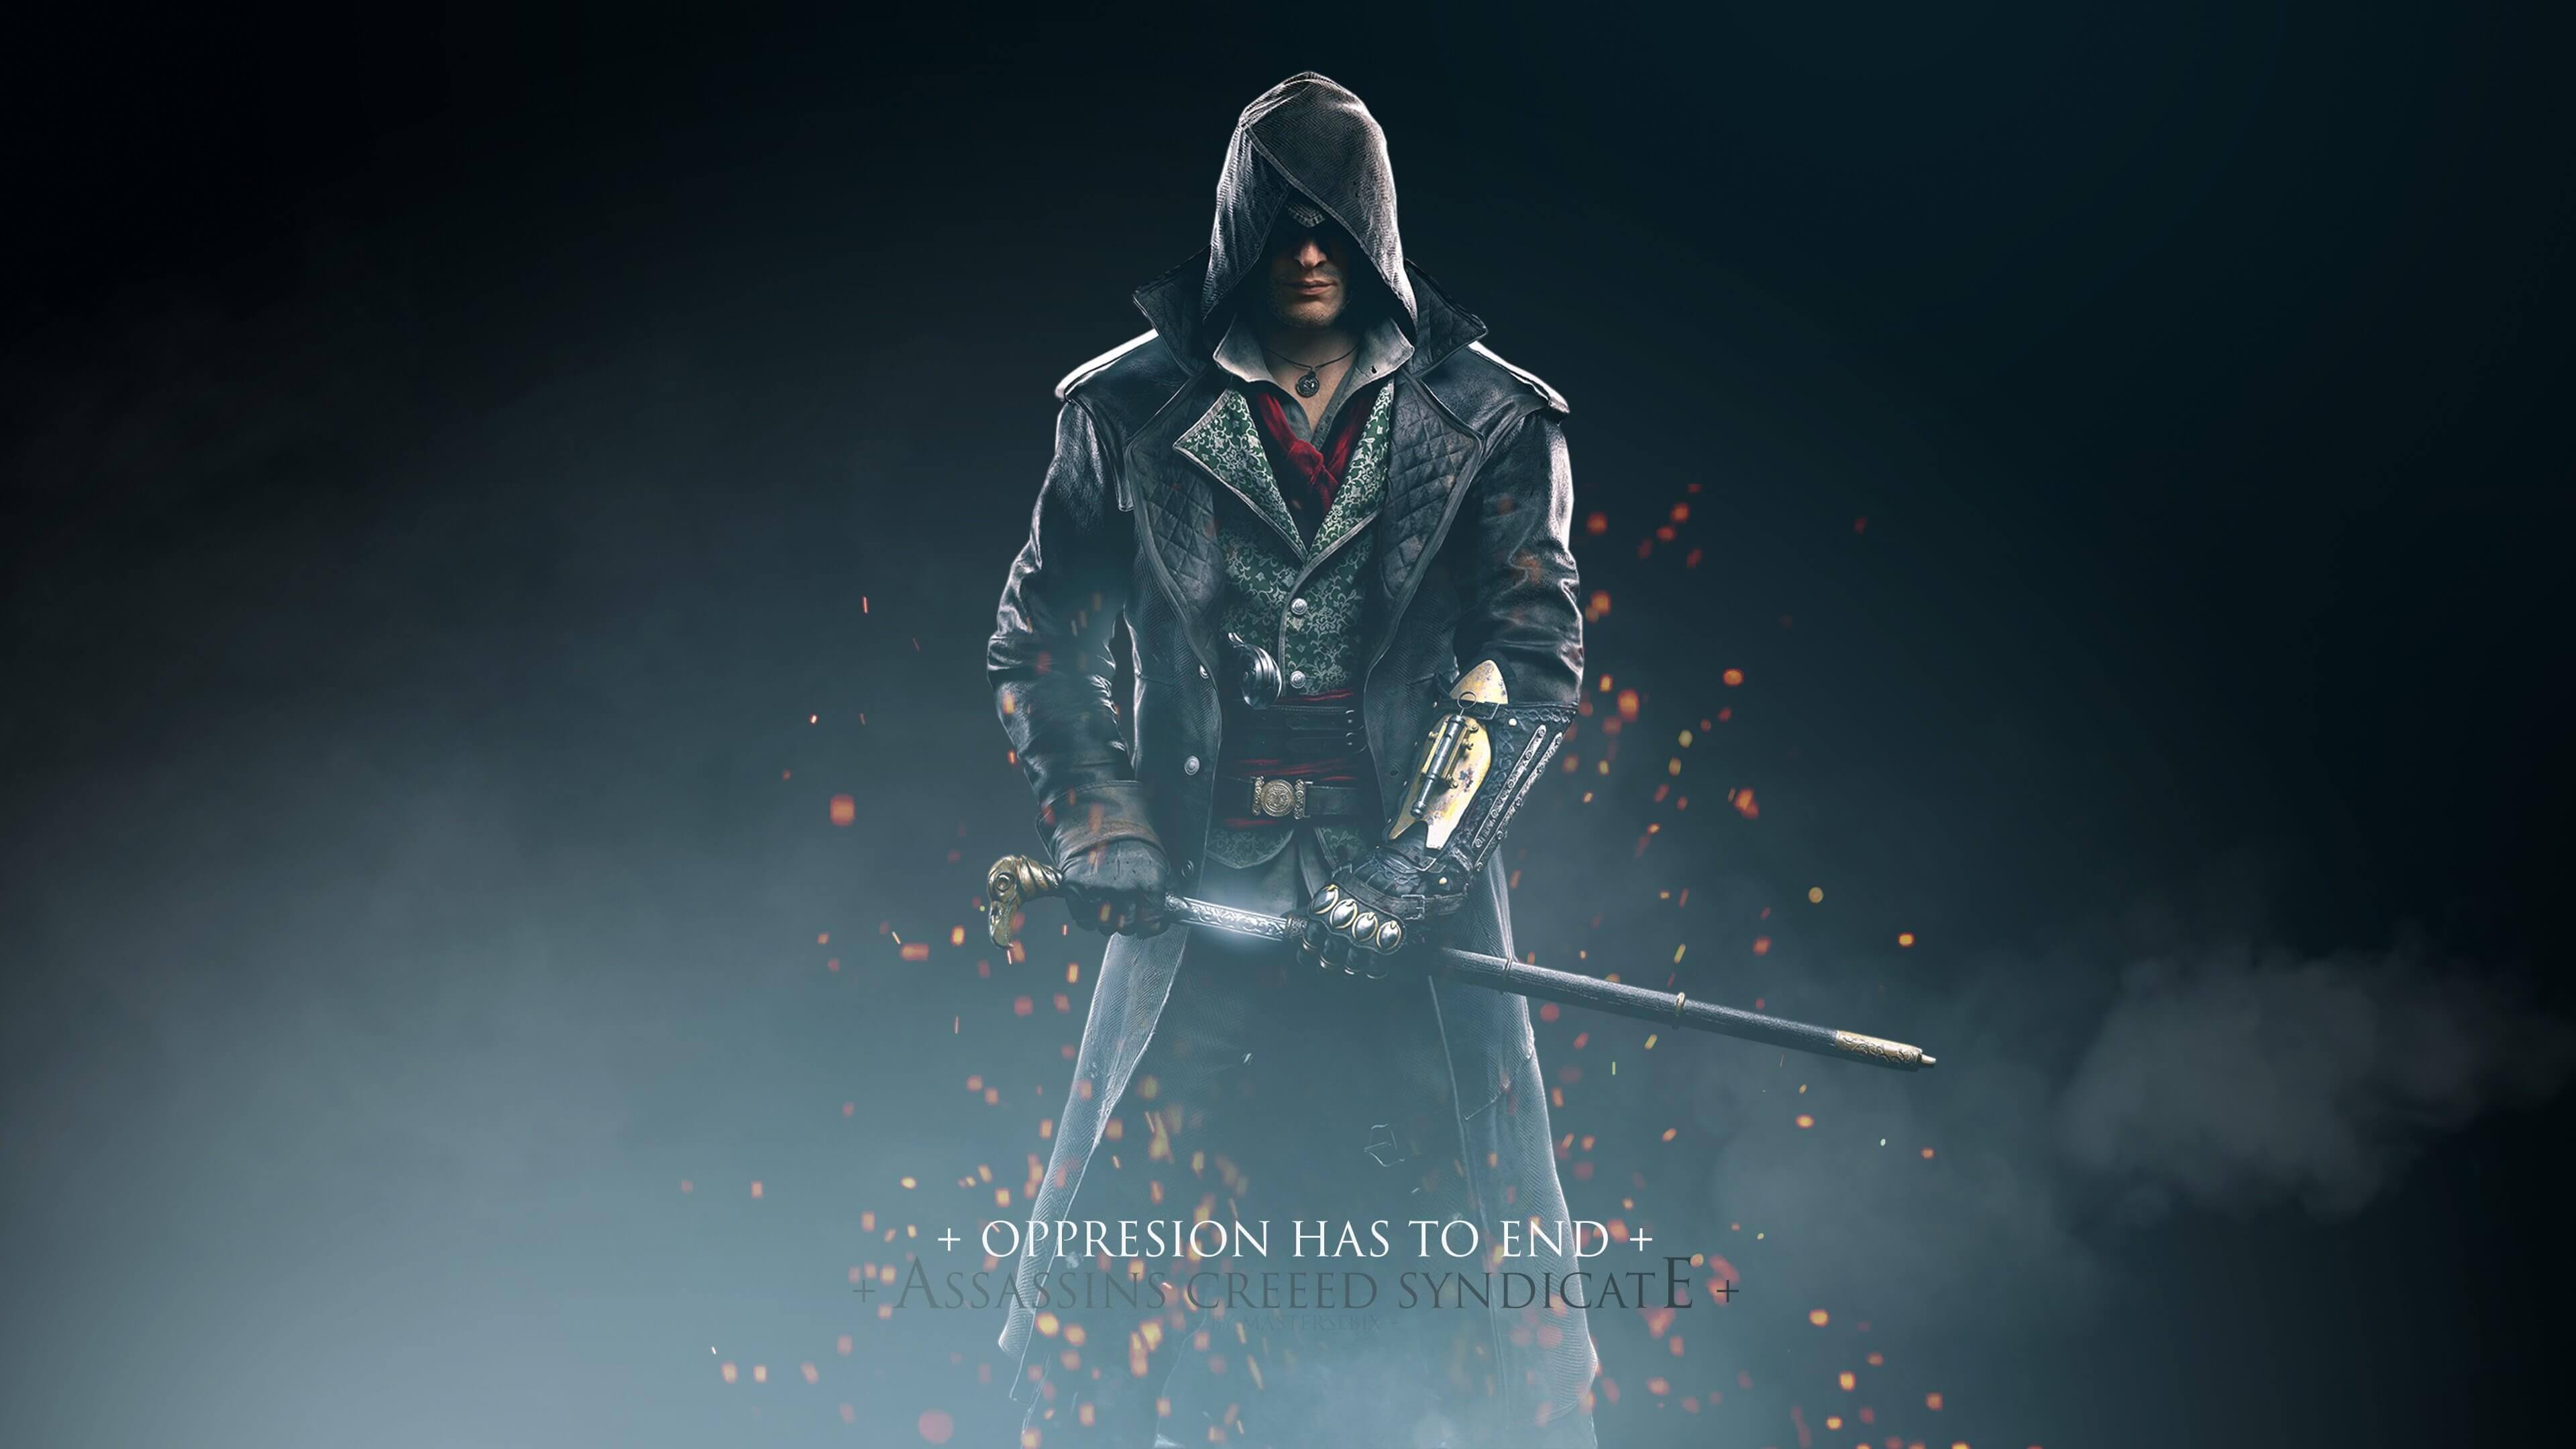 Assassin's Creed HD Desktop Wallpaper, Instagram photo, Background